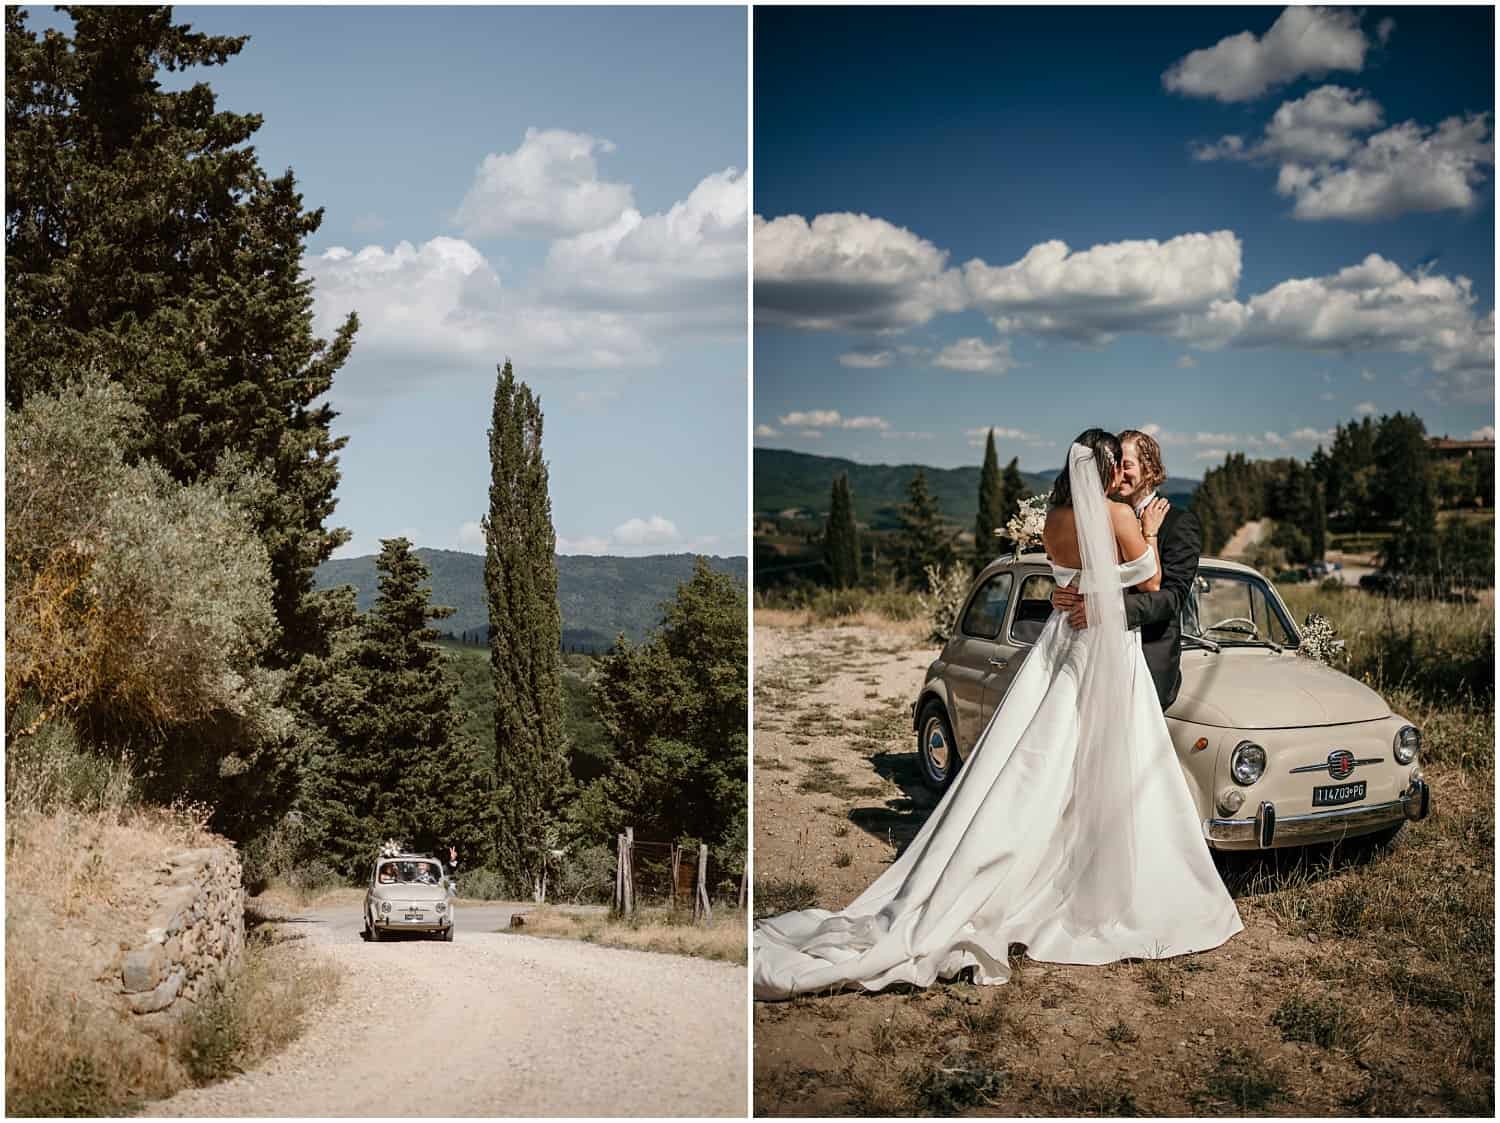 Destination wedding photo shoot in Tuscany, photos by wedding photographers Ludovica & Valerio